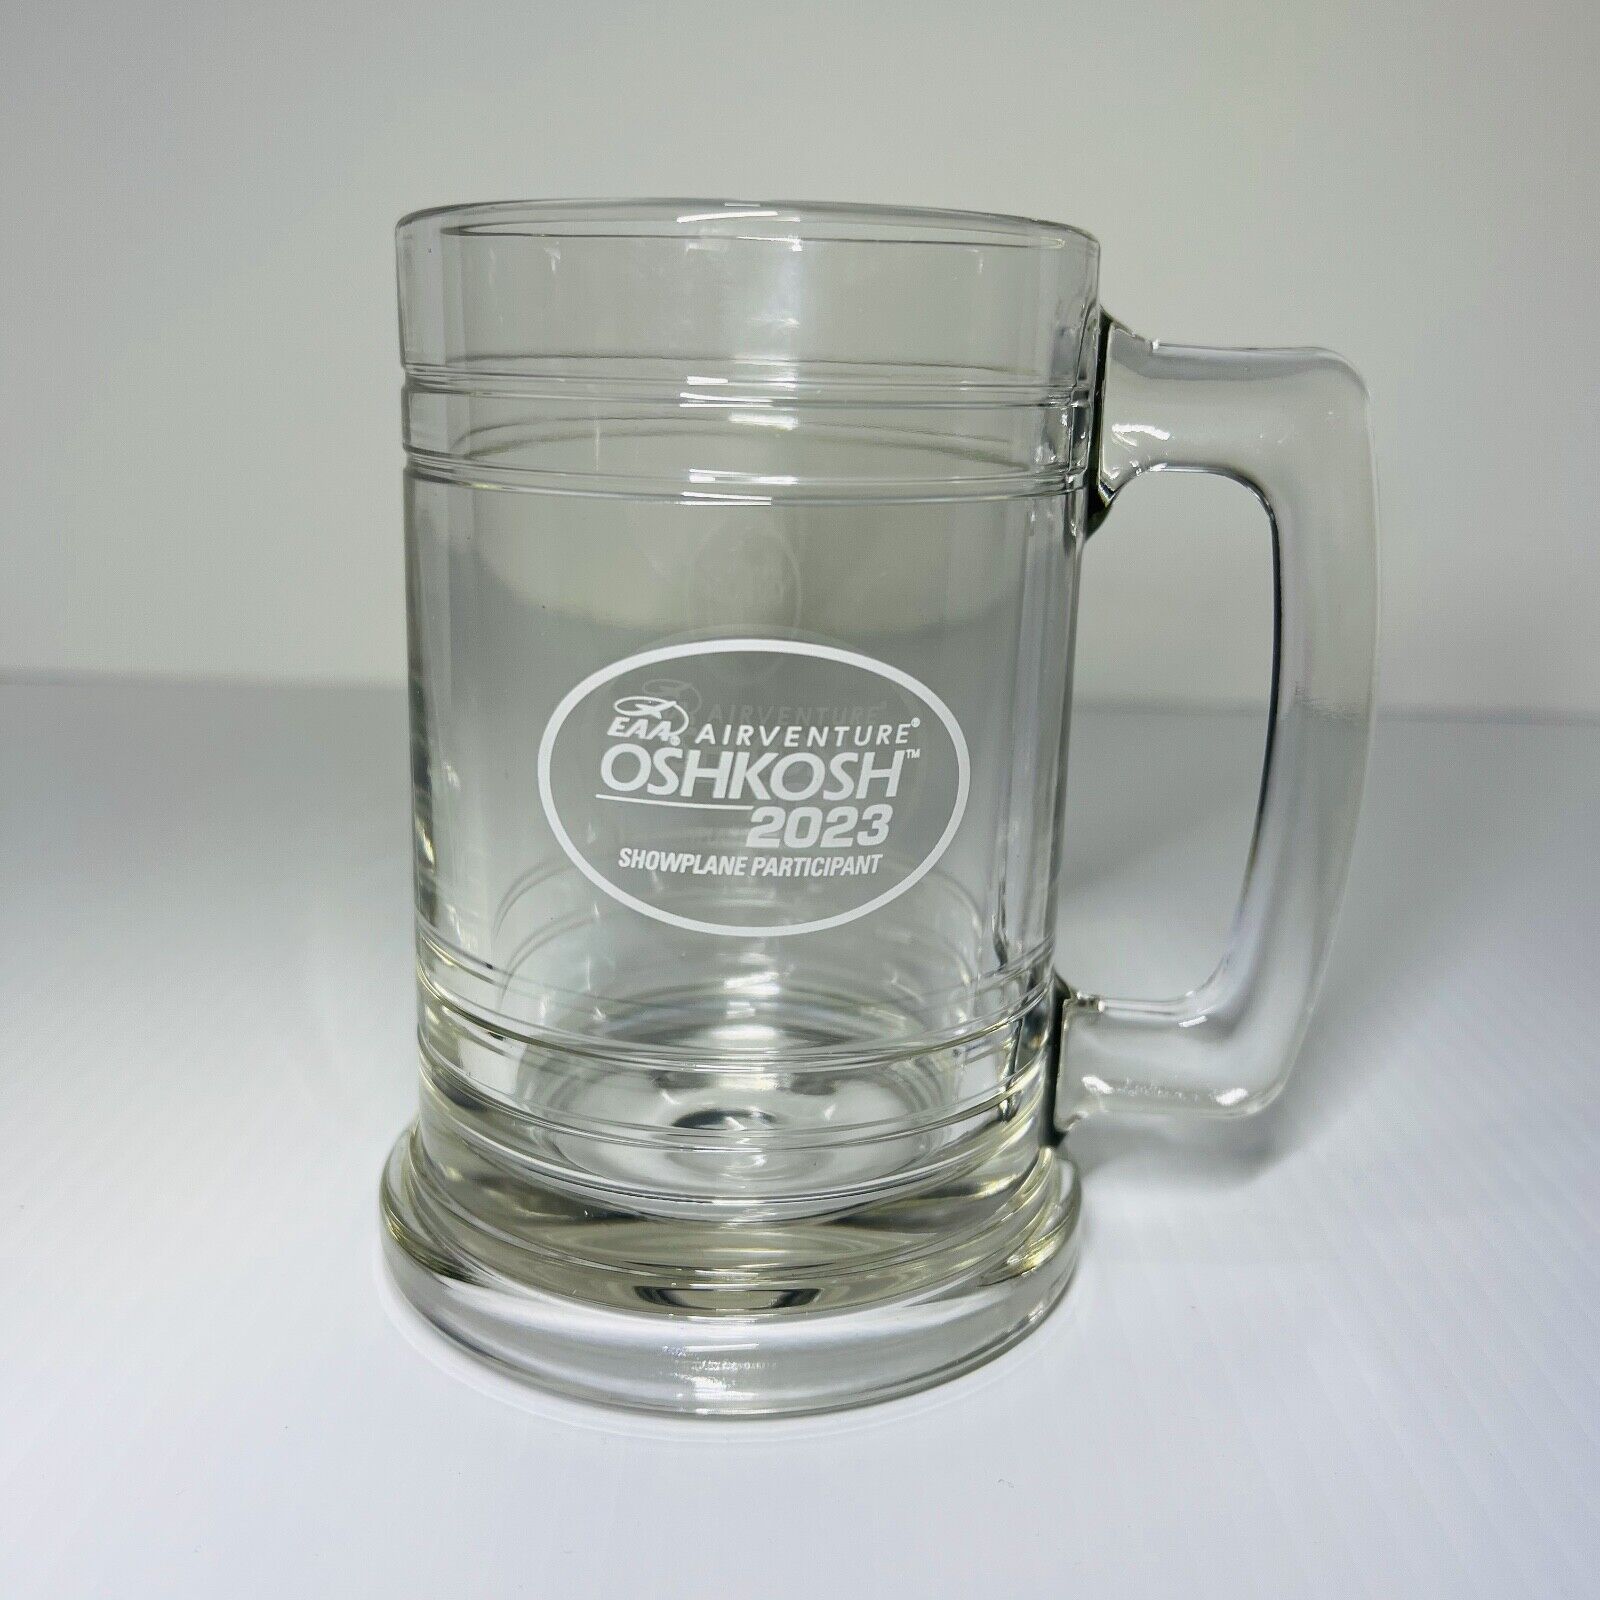 EAA Airventure Oshkosh Glass Mug 2023 Showplane Participant Beer Mug